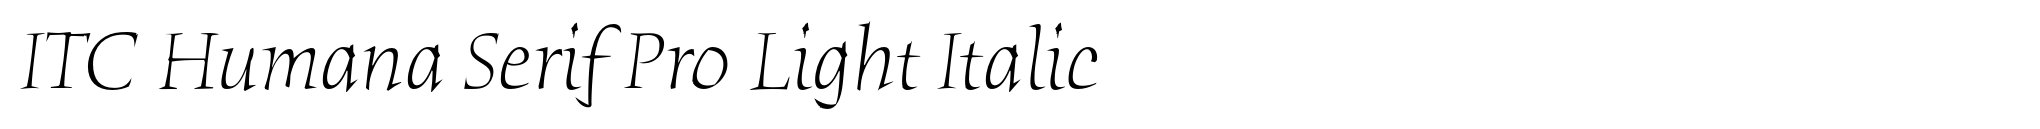 ITC Humana Serif Pro Light Italic image